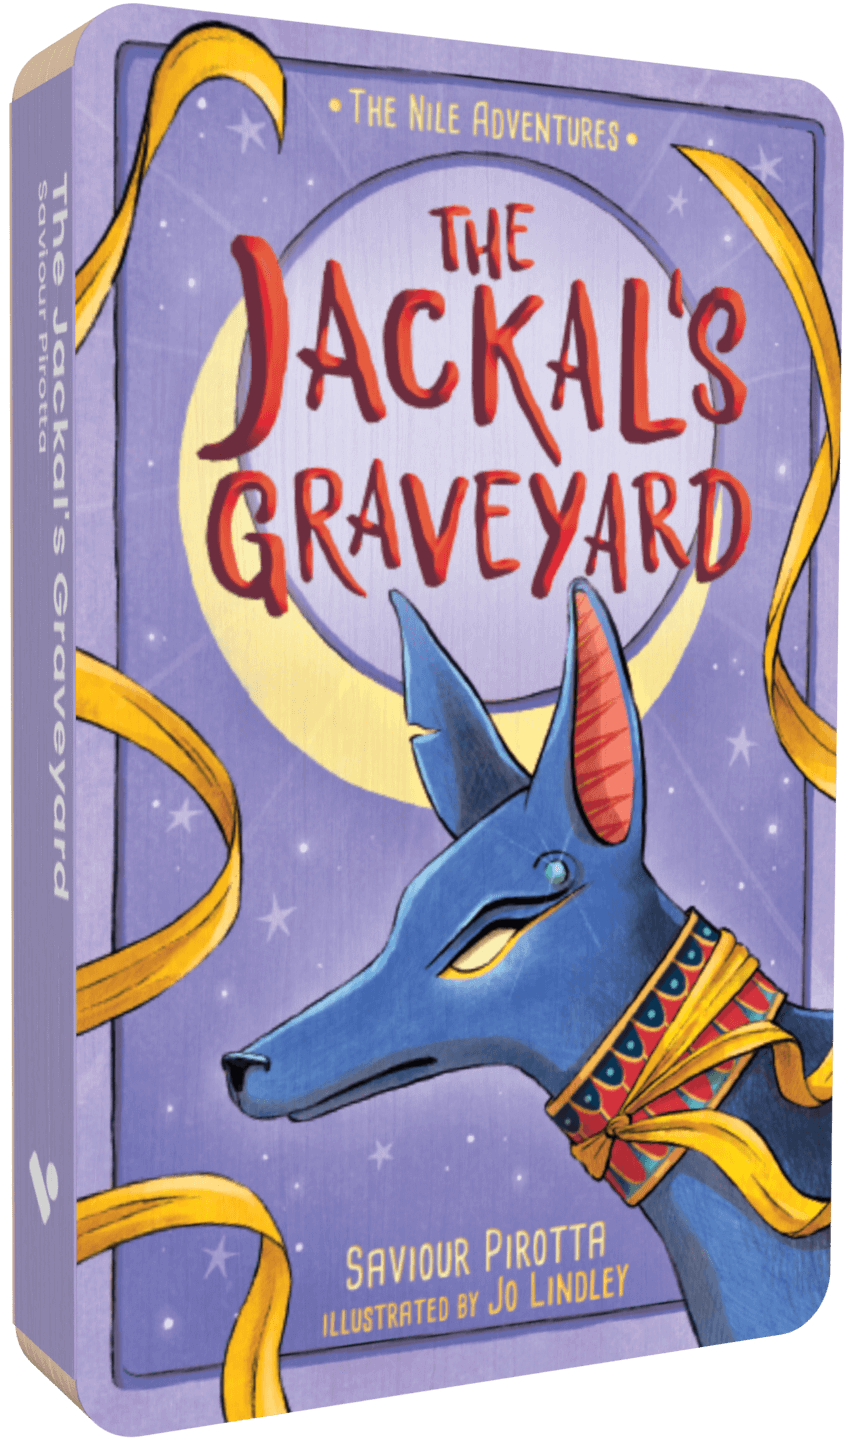 The Jackal's Graveyard